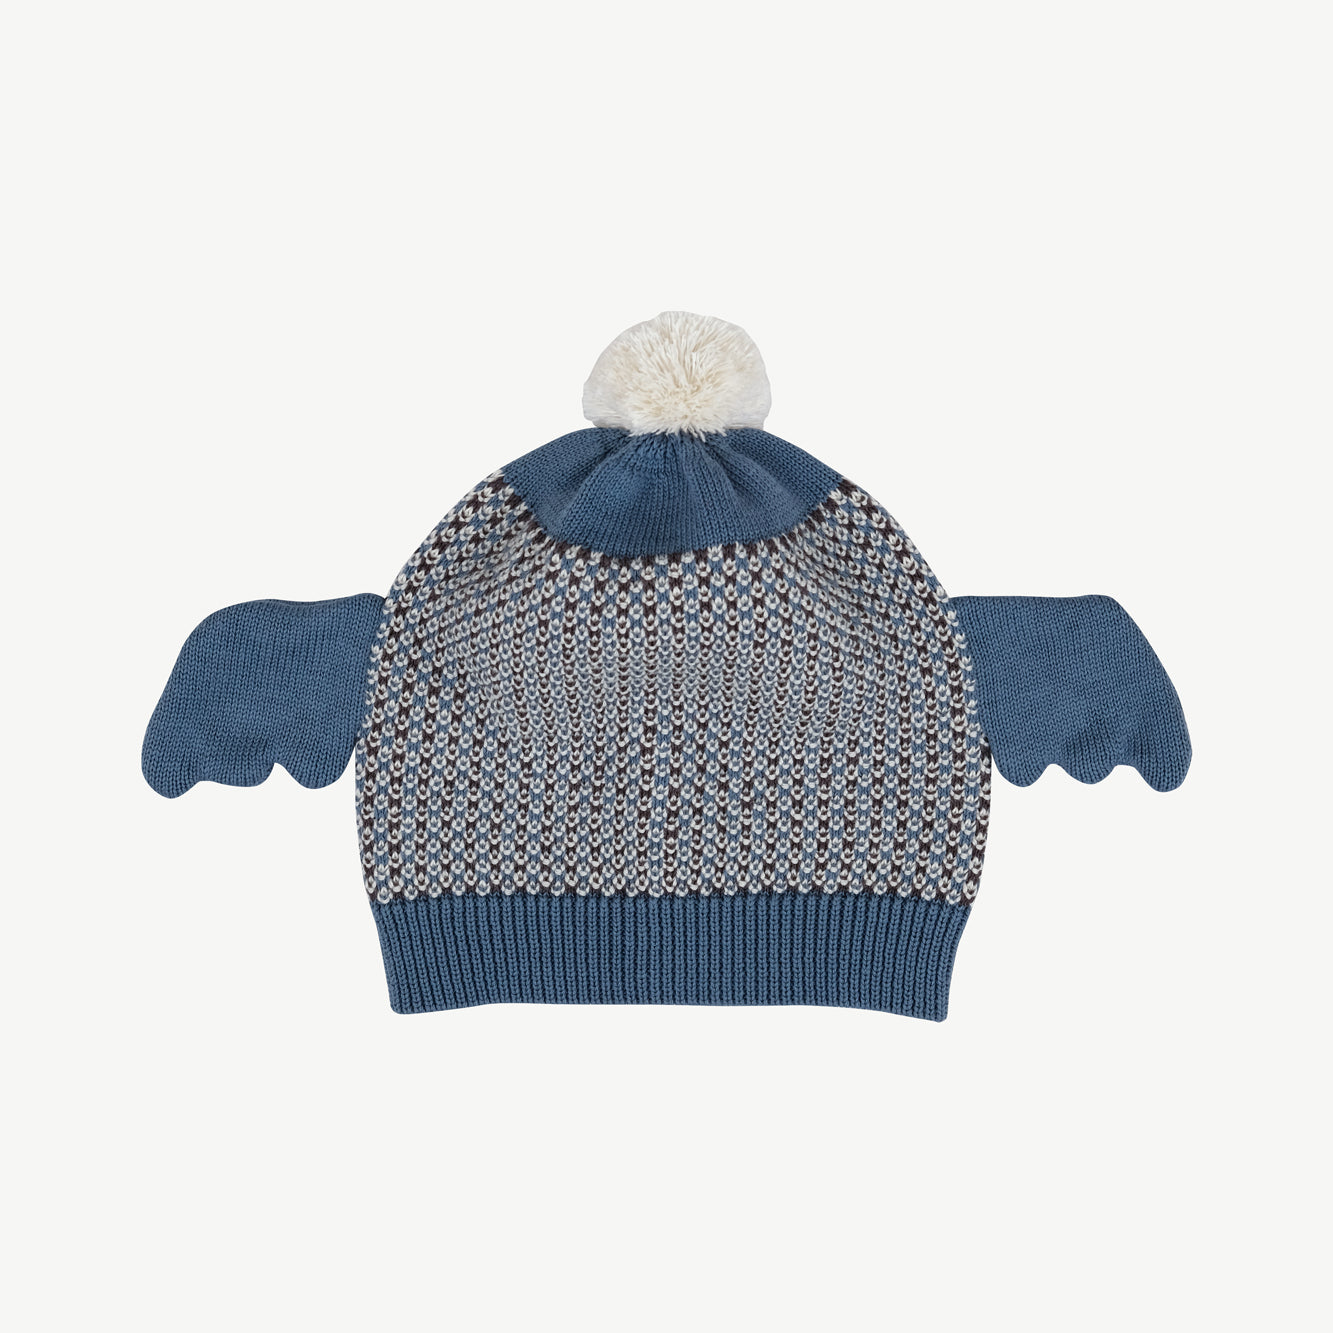 'multi' blue mirage knit wings baby beanie